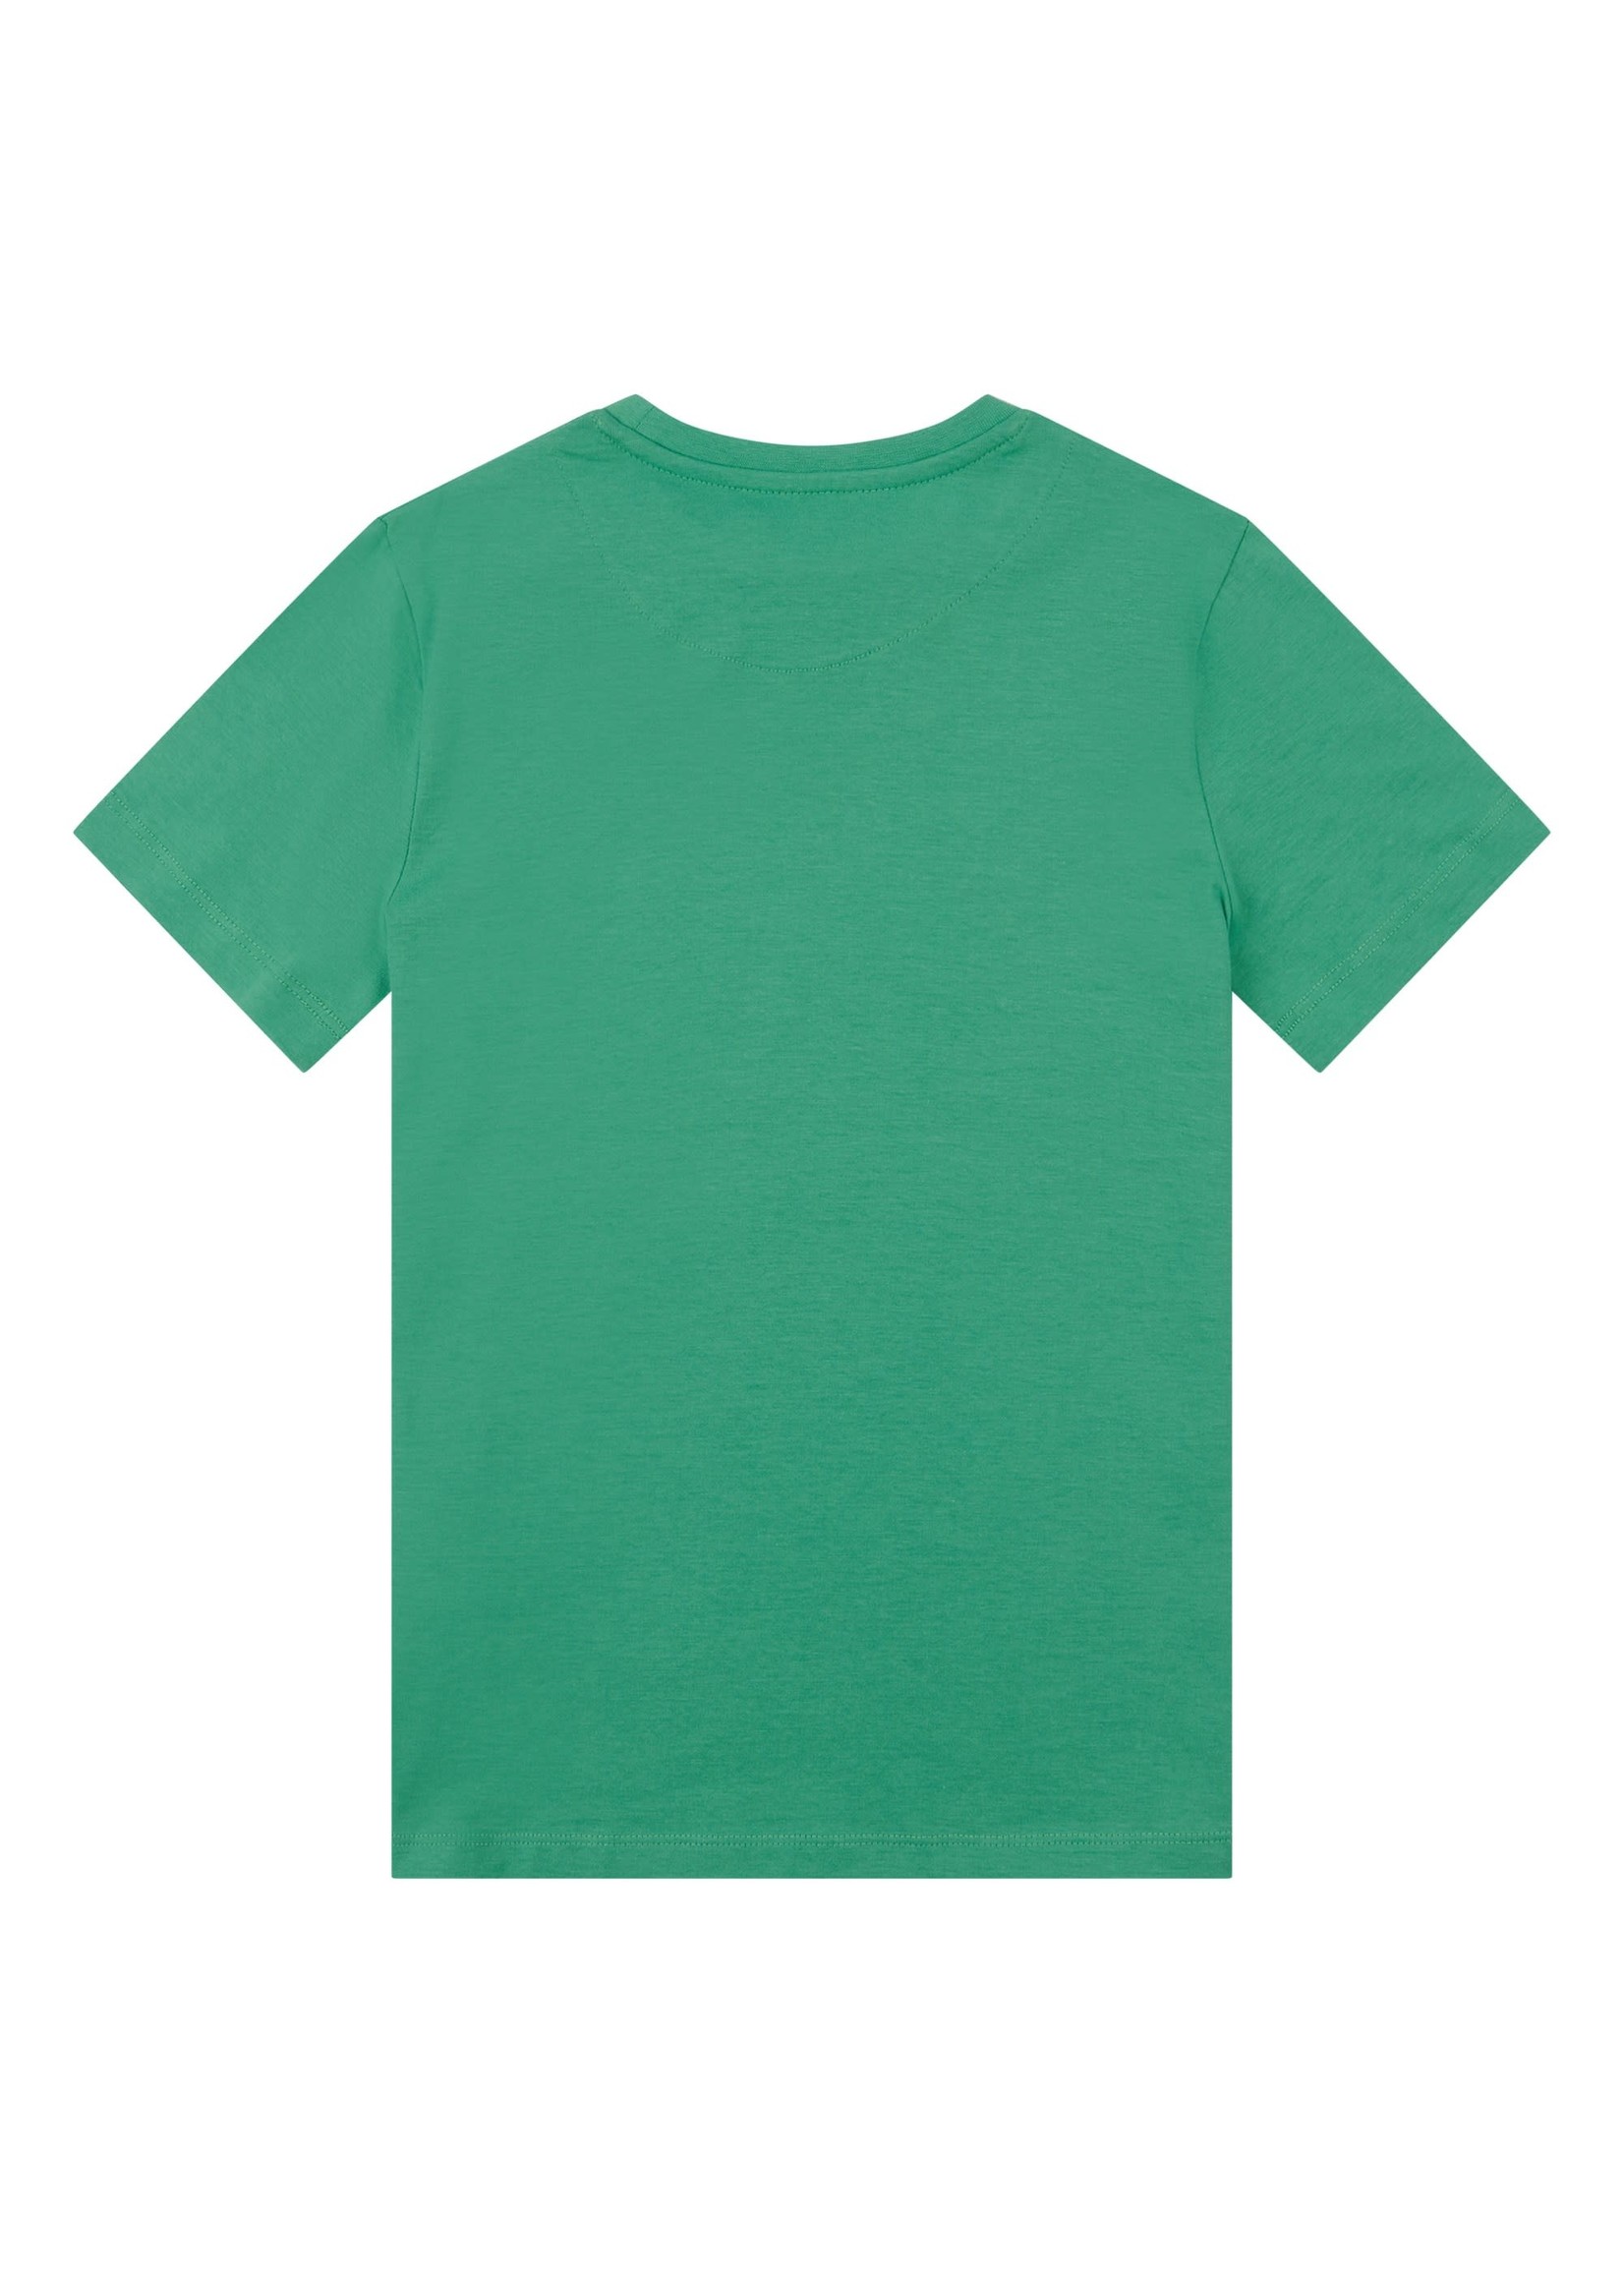 Lyle & Scott Lyle&Scott classic t-shirt green spruce - LSC0003S 400